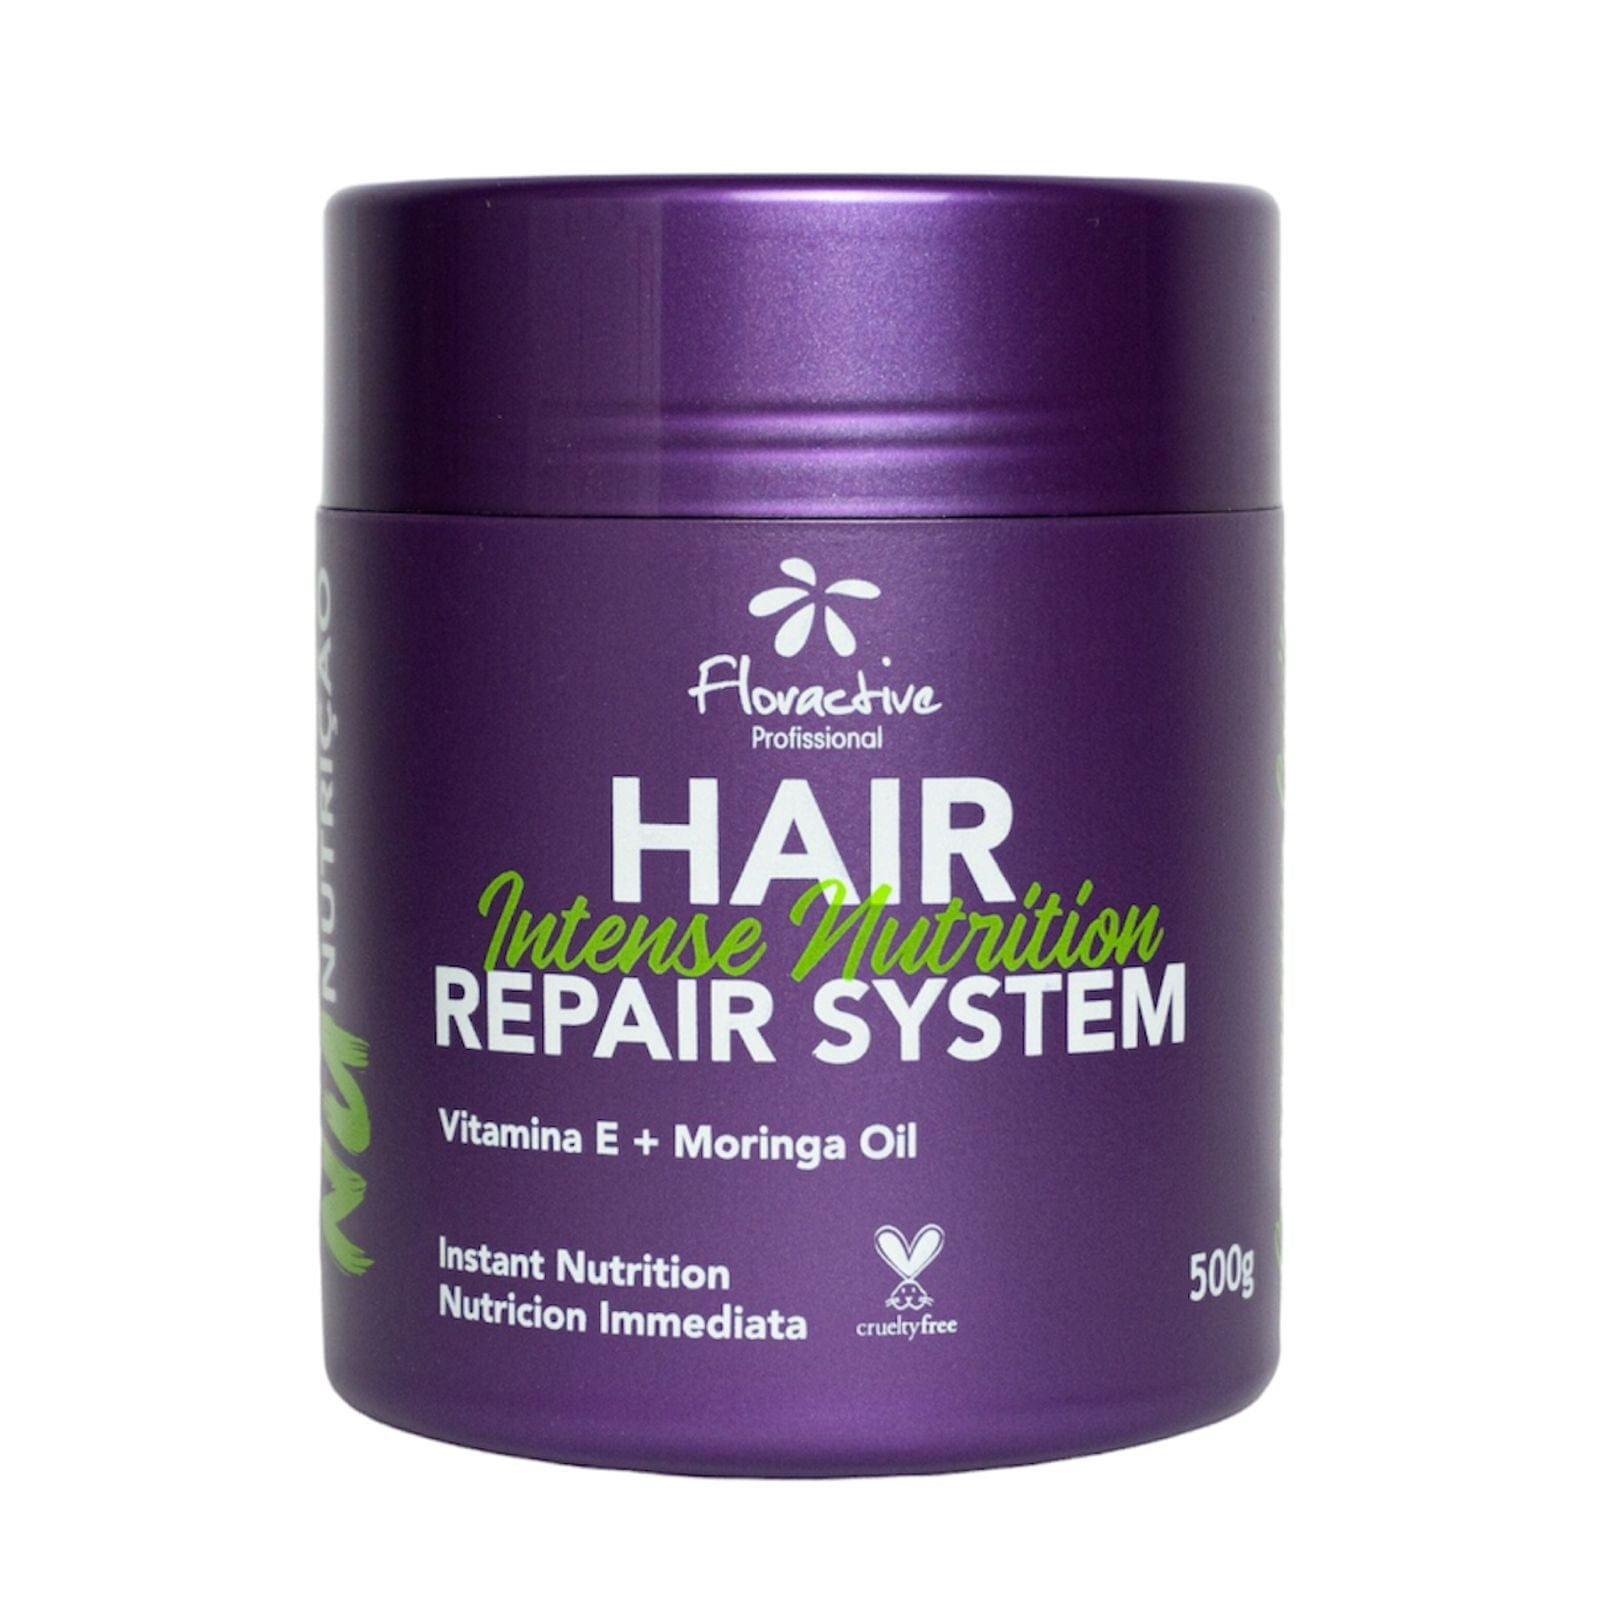 Floractive Hair Intense Nutrition Repair System Hair Mask 500g